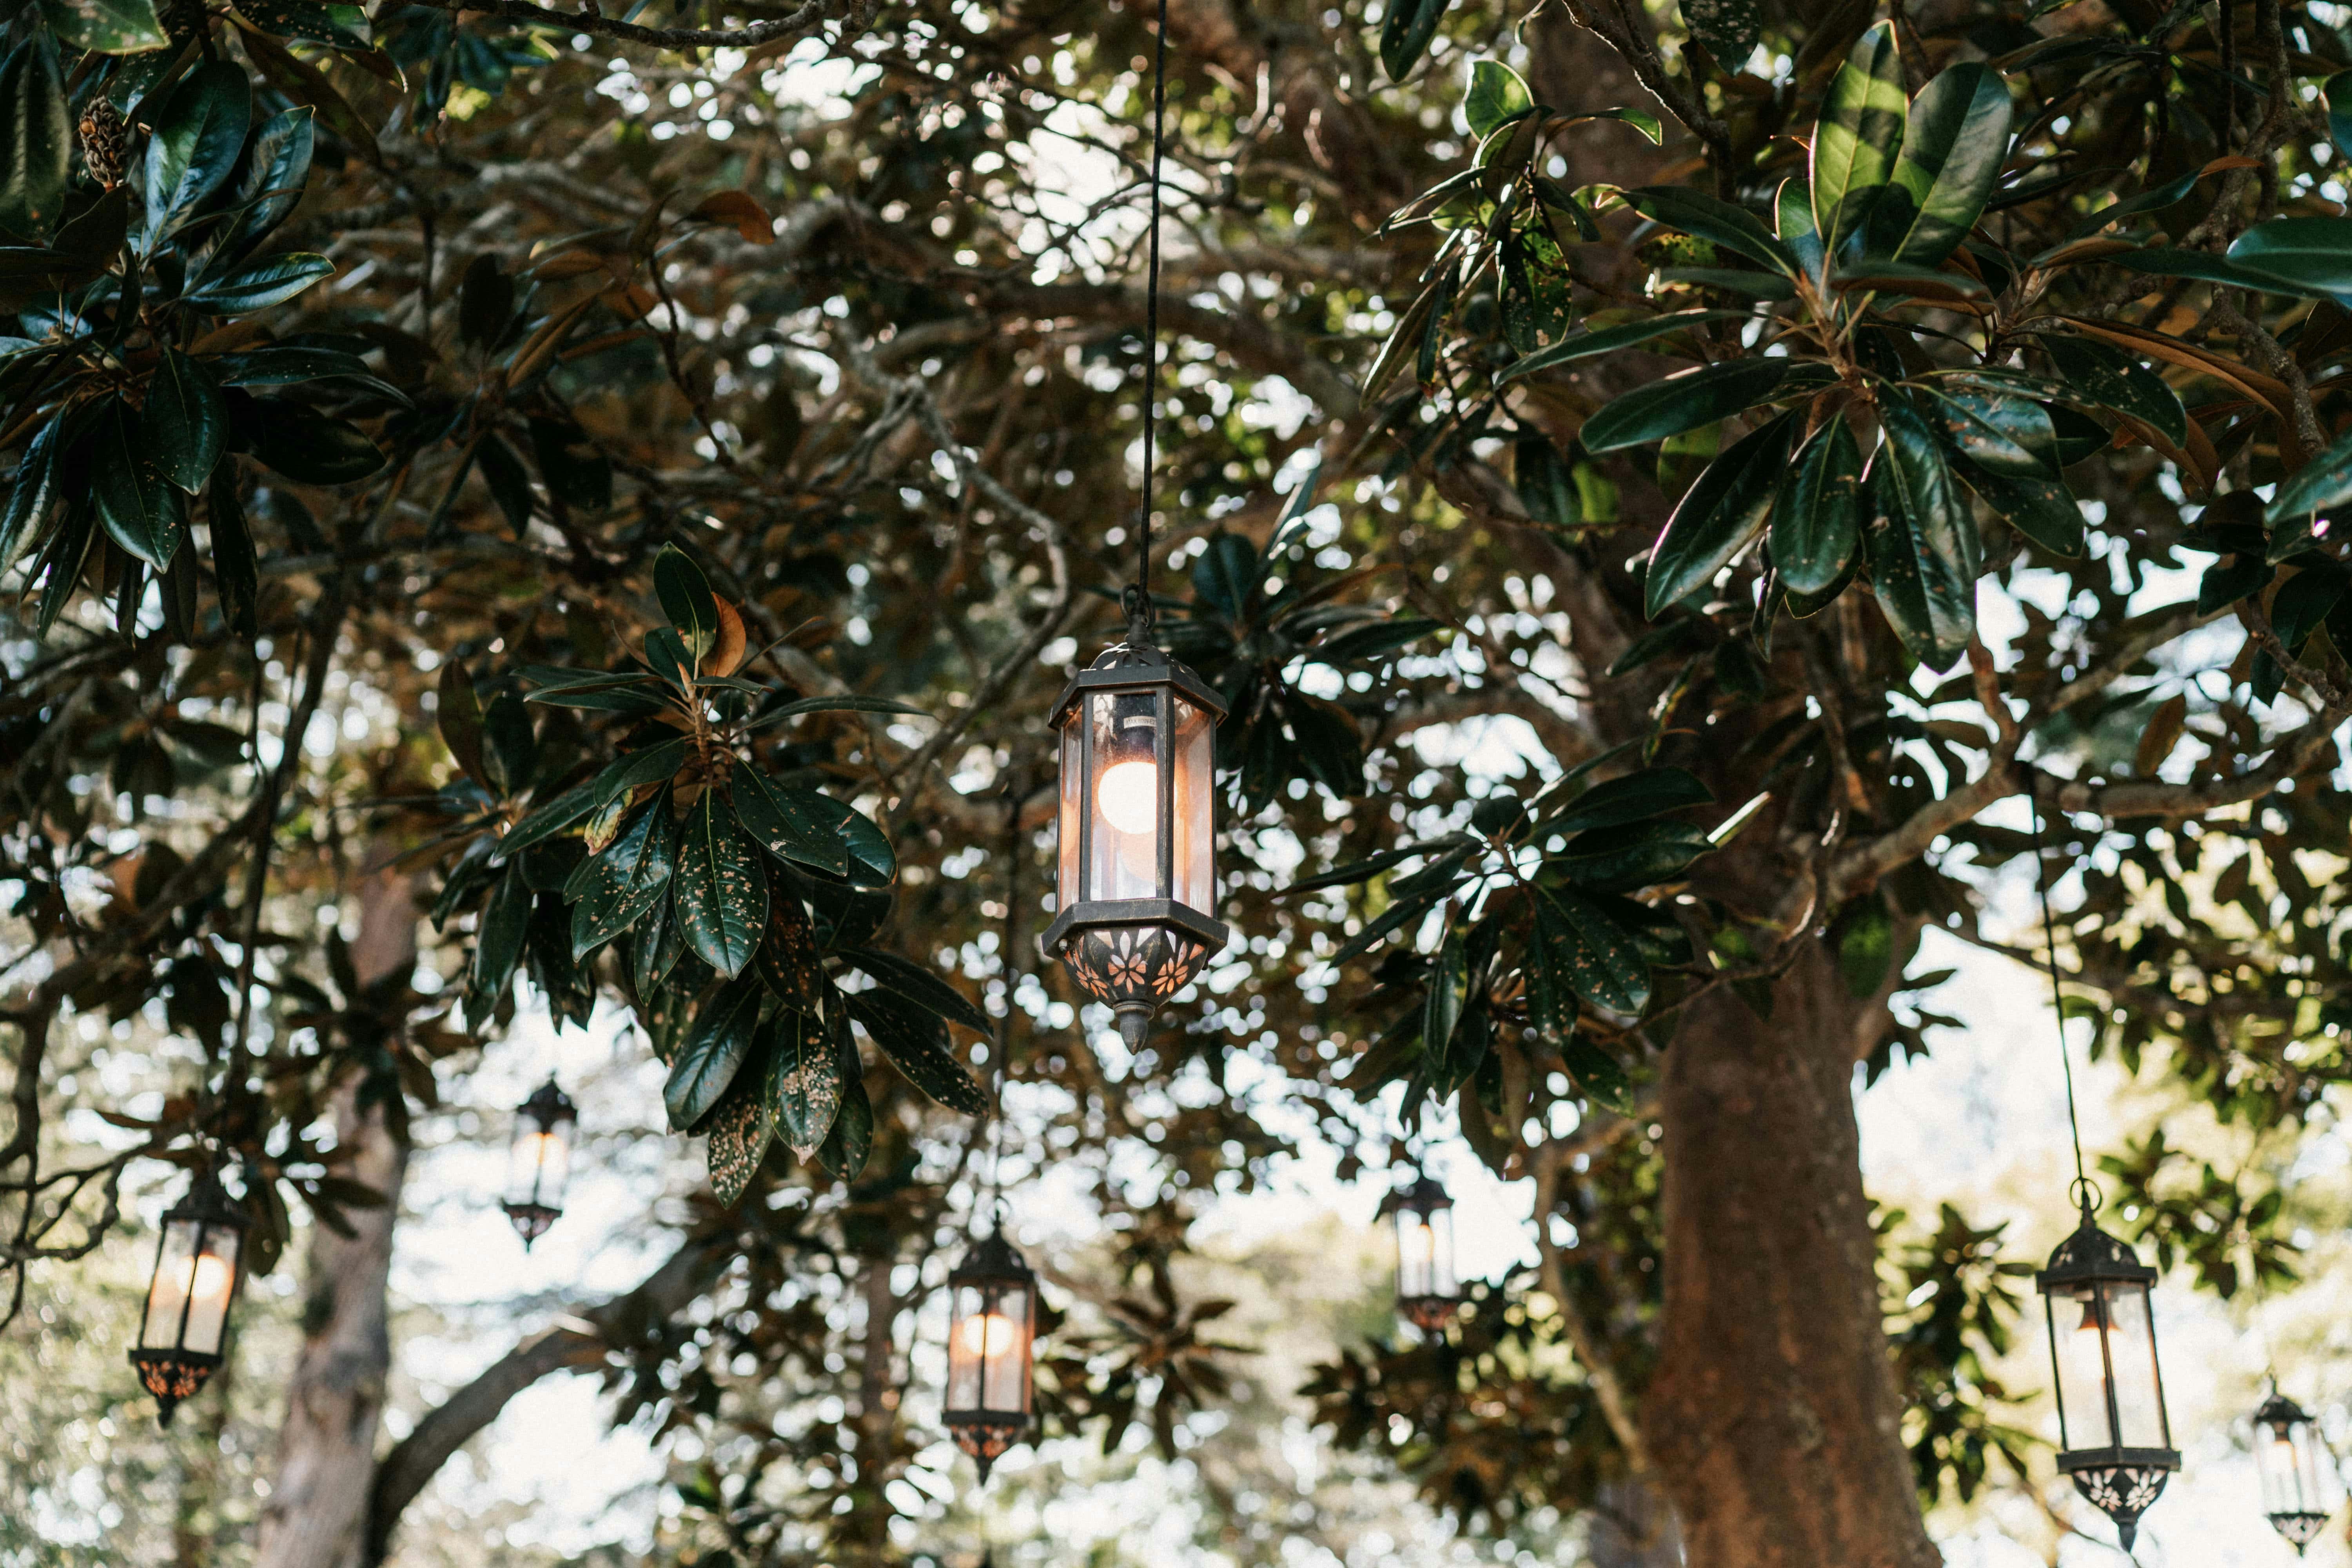 Lantern suspended in magnolia tree